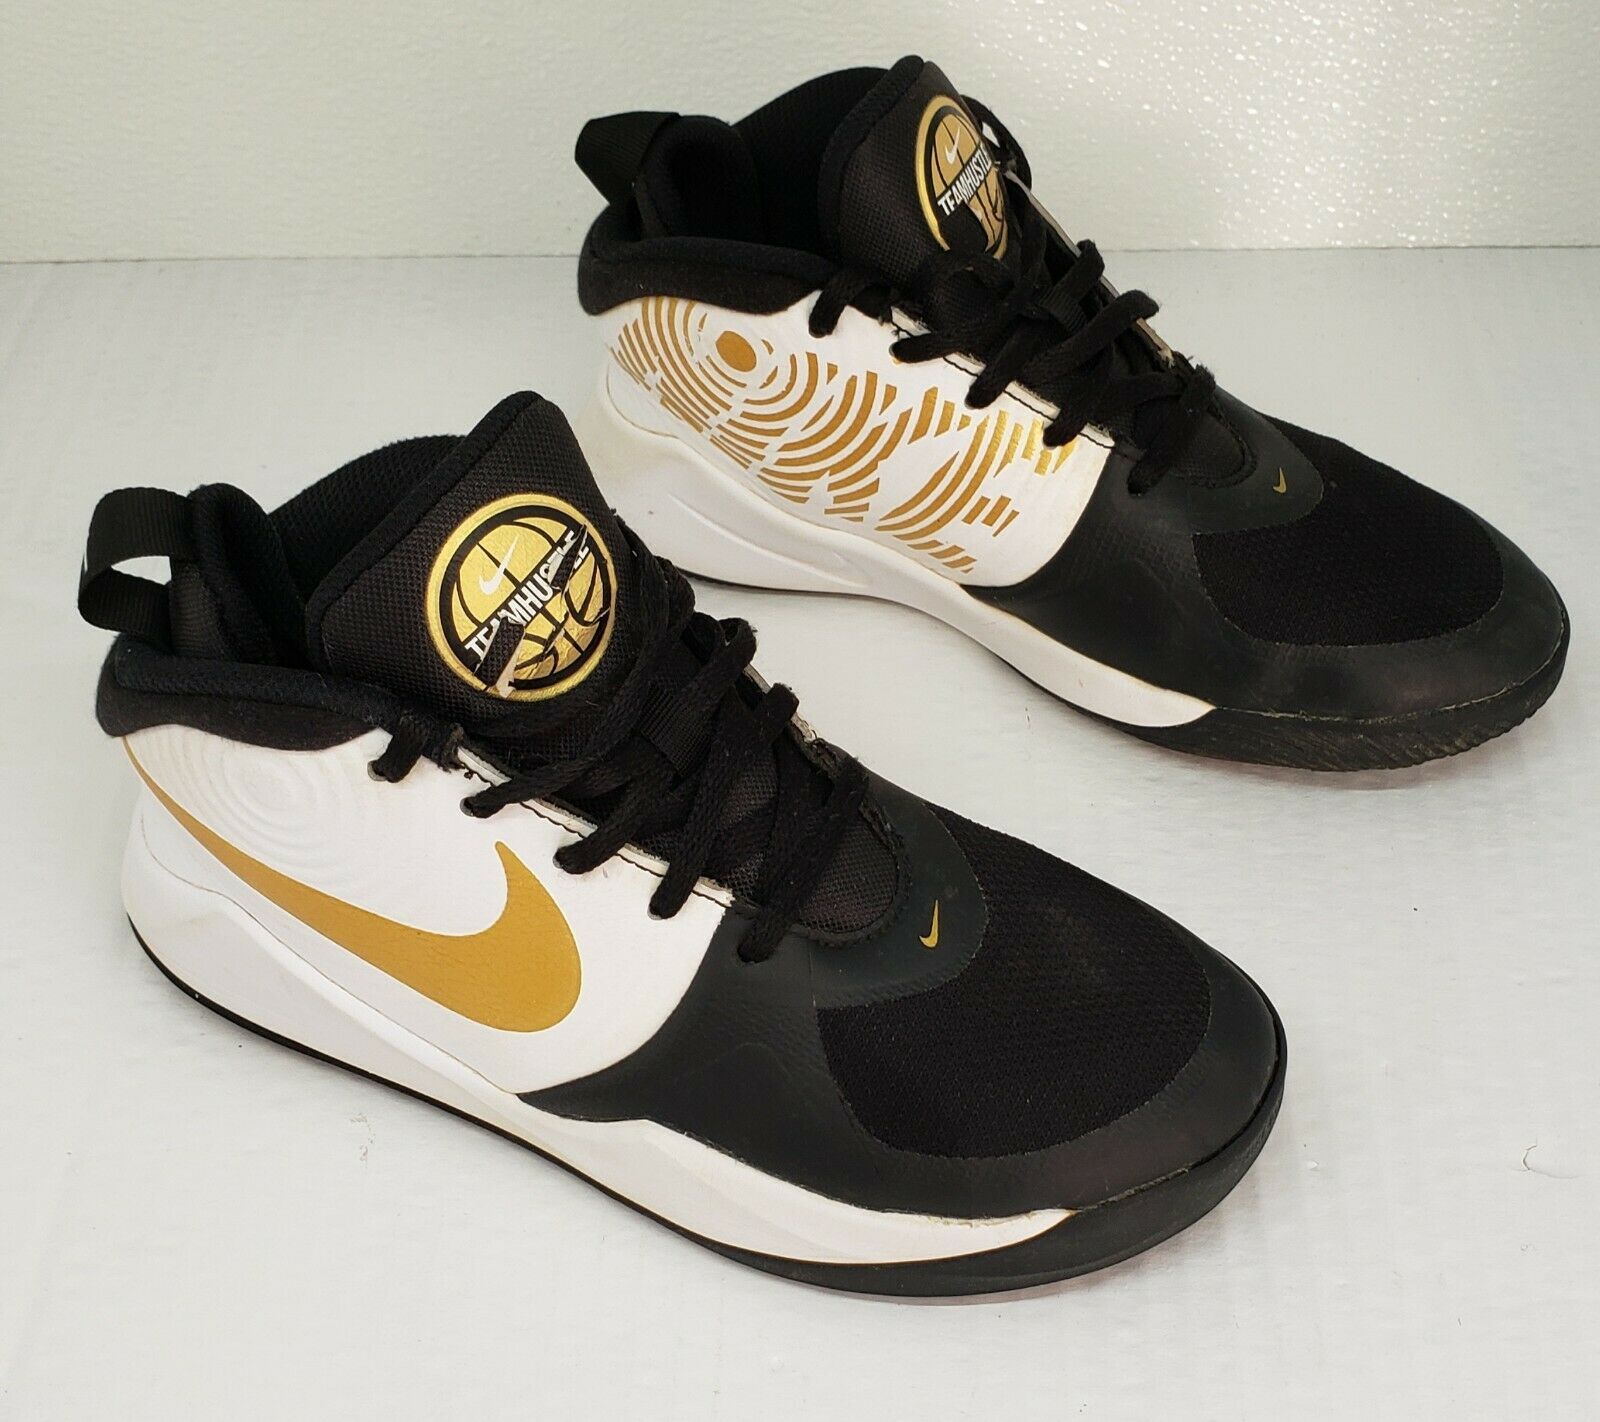 Nike Team Hustle D 9 (GS) AQ4224-004 Basketball Shoes, Big Boy's Size 4.5 M